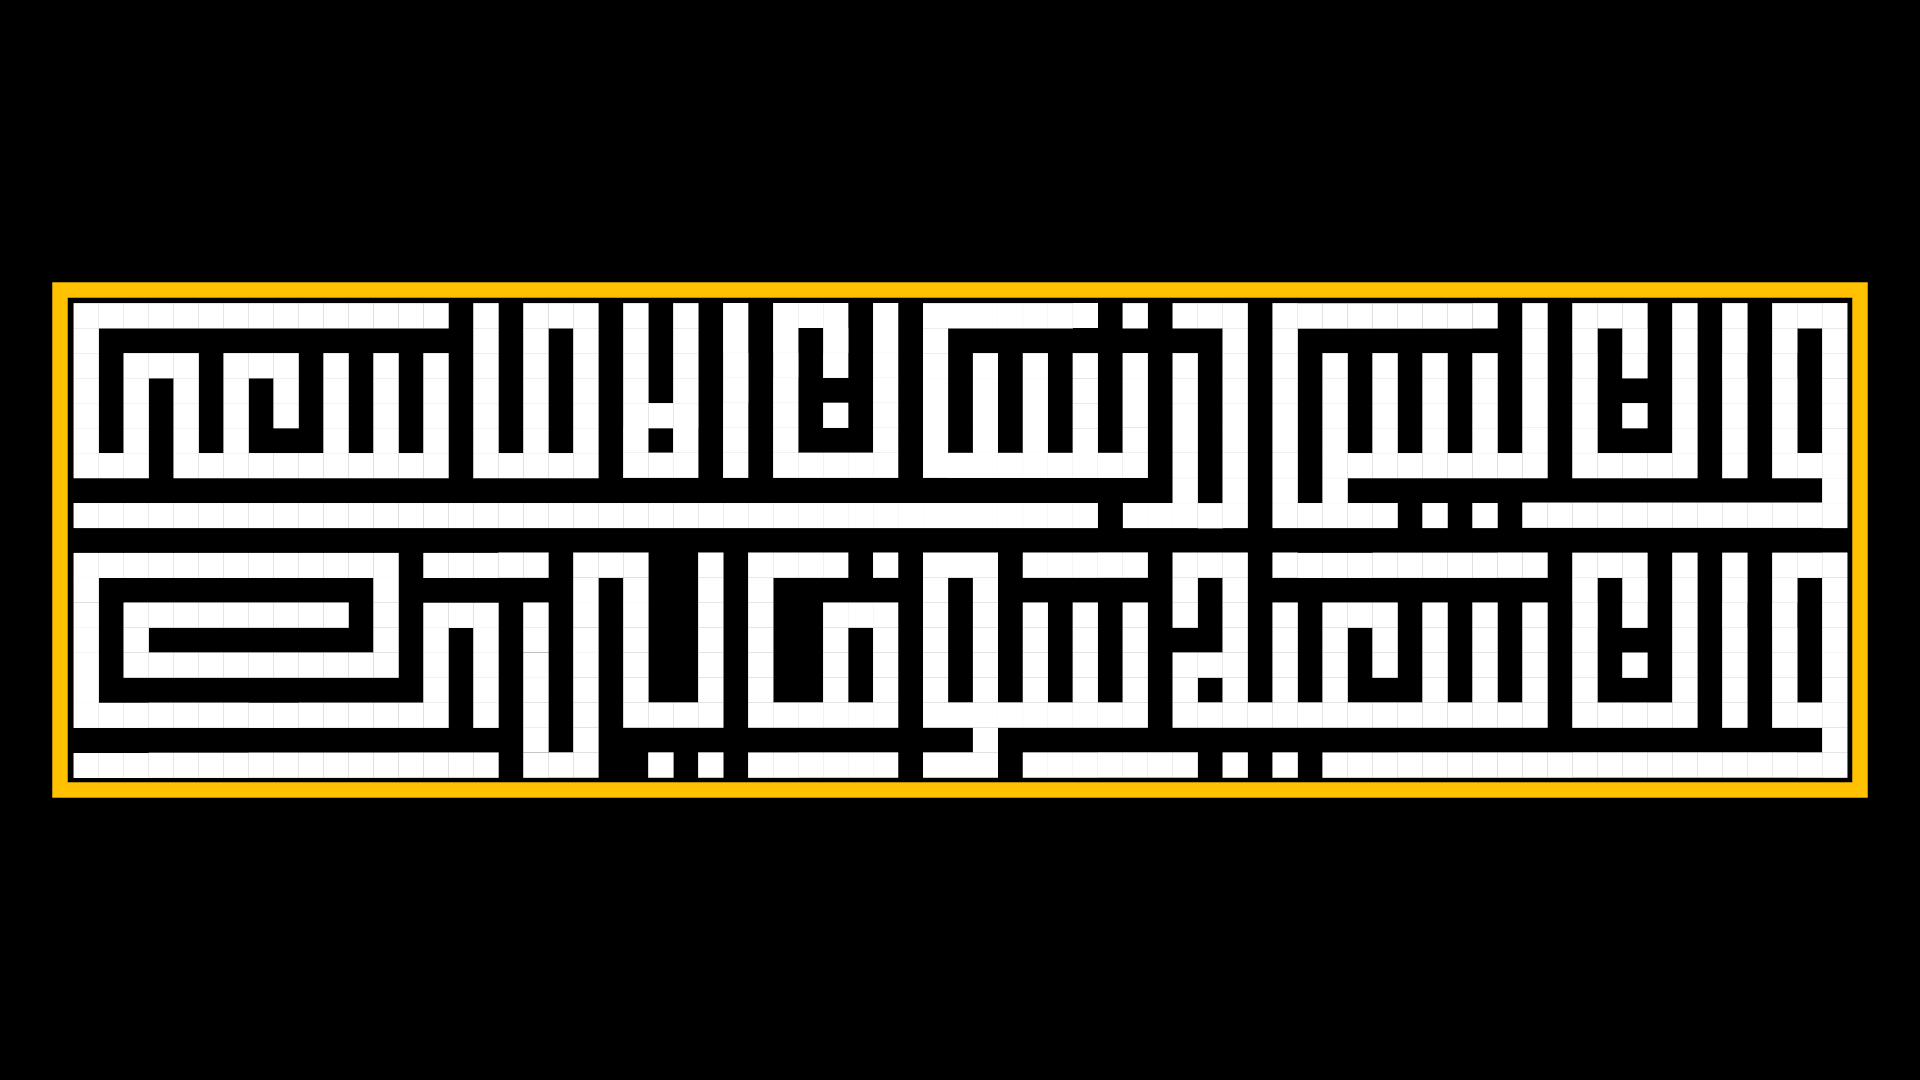 Islam Quran Arabic Religion Simple Background Black Background 1920x1080